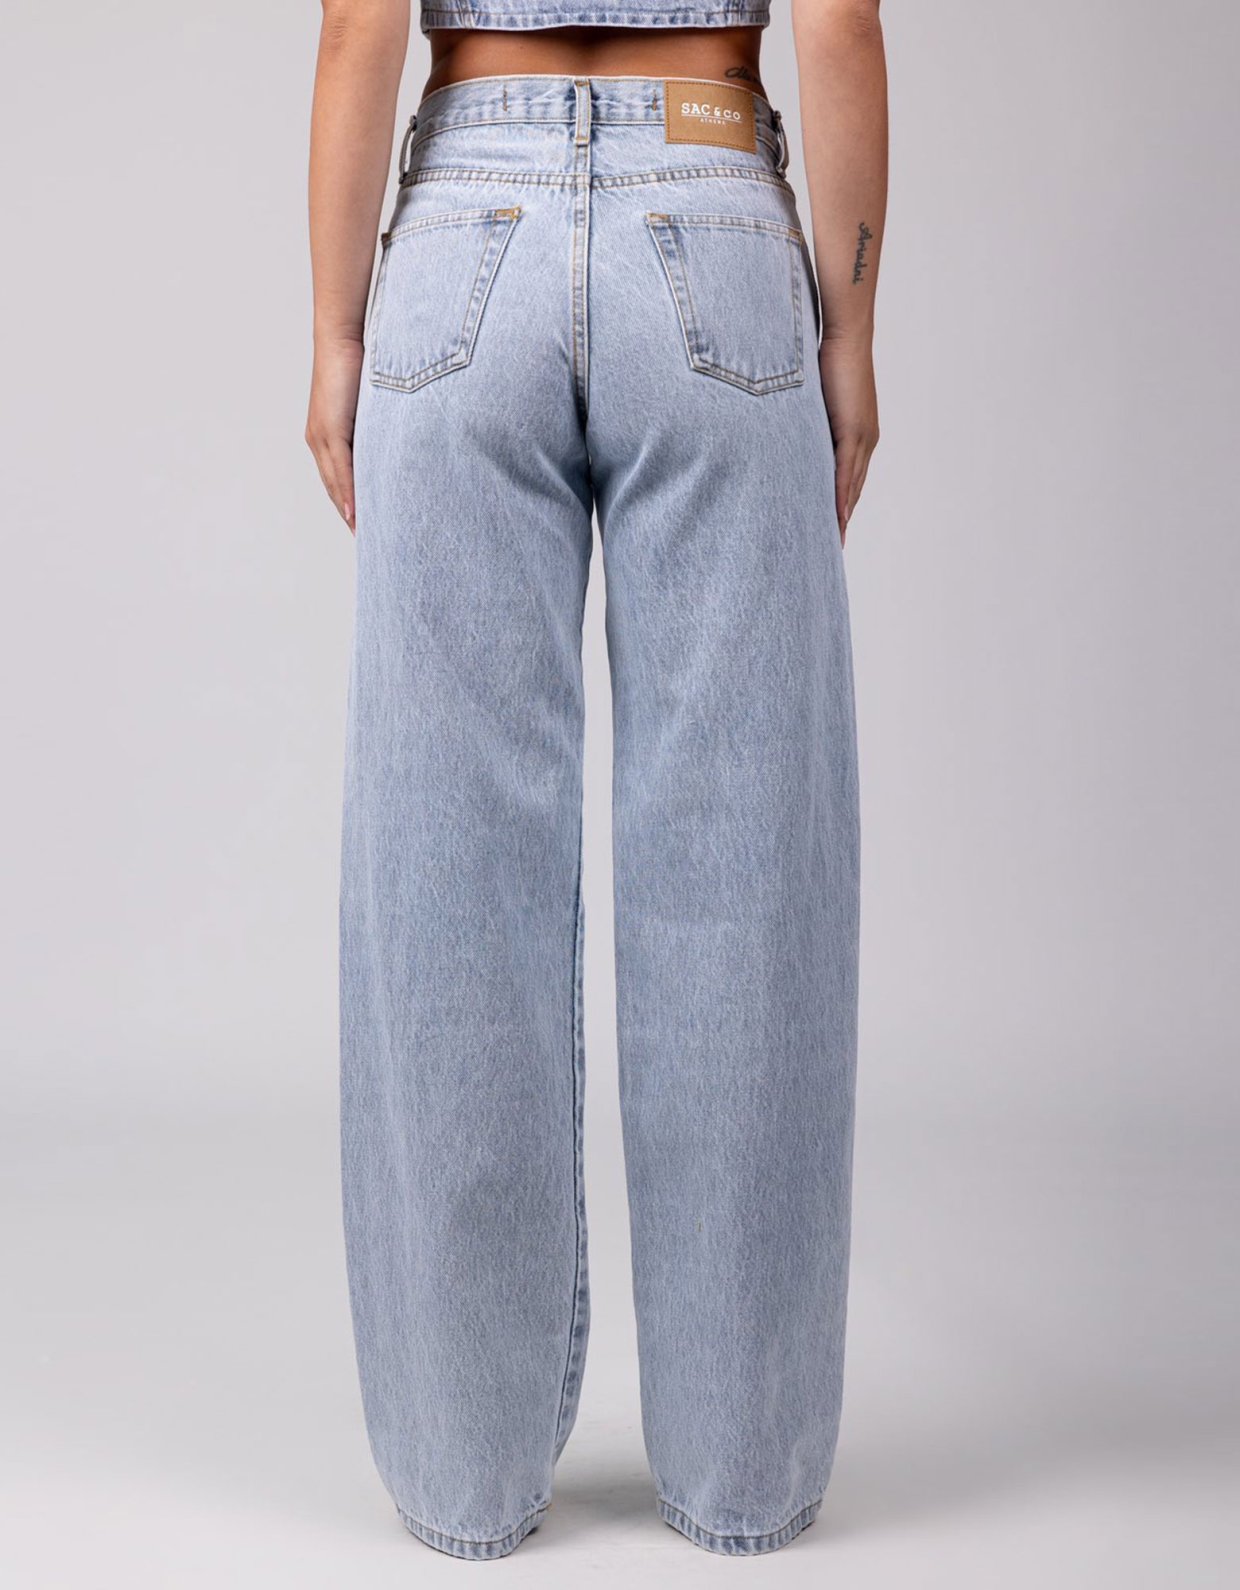 Sac & CO Jeans Aspa straight fit light blue denim pants